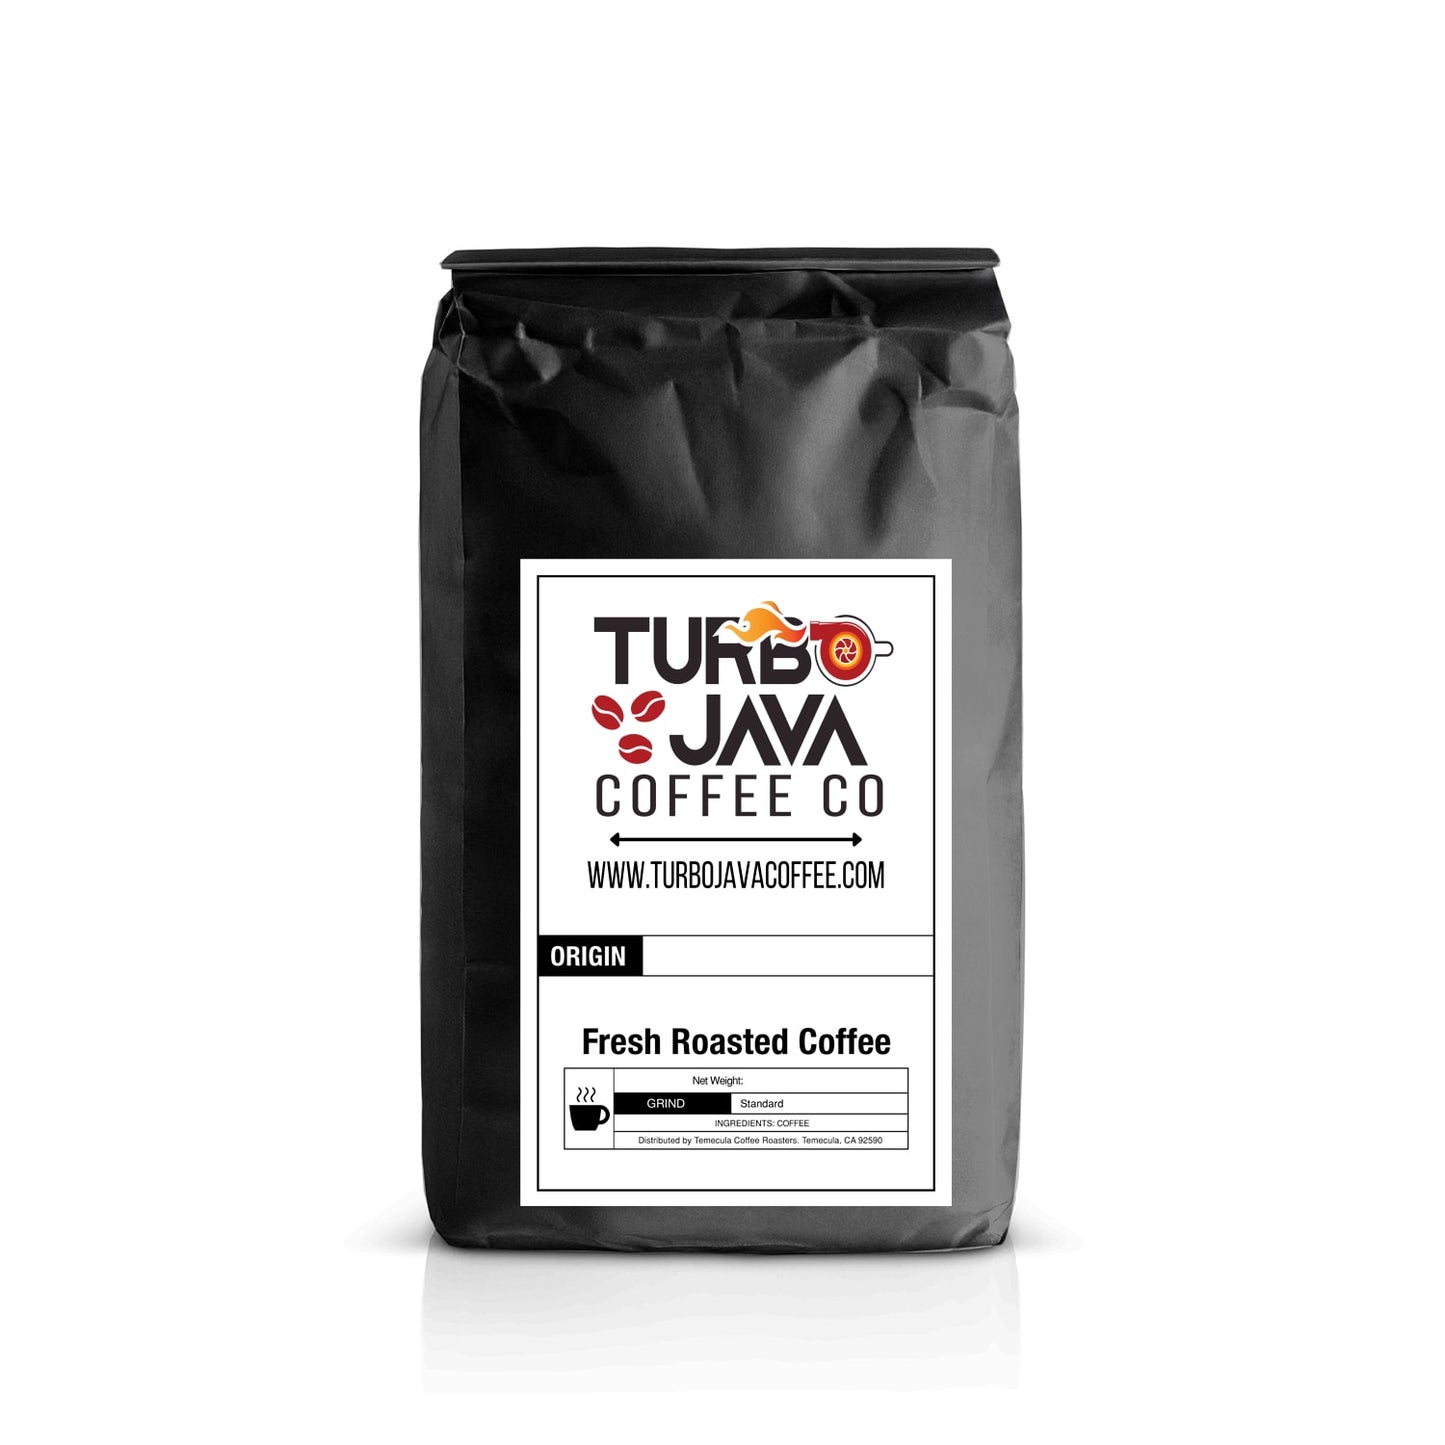 Turbo Java Coffee Co. Pecan Pie Coffee 12 oz / Standard,12 oz / Coarse,12 oz / Espresso,12 oz / Whole Bean,1 lb / Standard,1 lb / Coarse,1 lb / Espresso,1 lb / Whole Bean,2 lb / Standard,2 lb / Coarse,2 lb / Espresso,2 lb / Whole Bean,5 lb / Standard,5 lb / Coarse,5 lb / Espresso,5 lb / Whole Bean